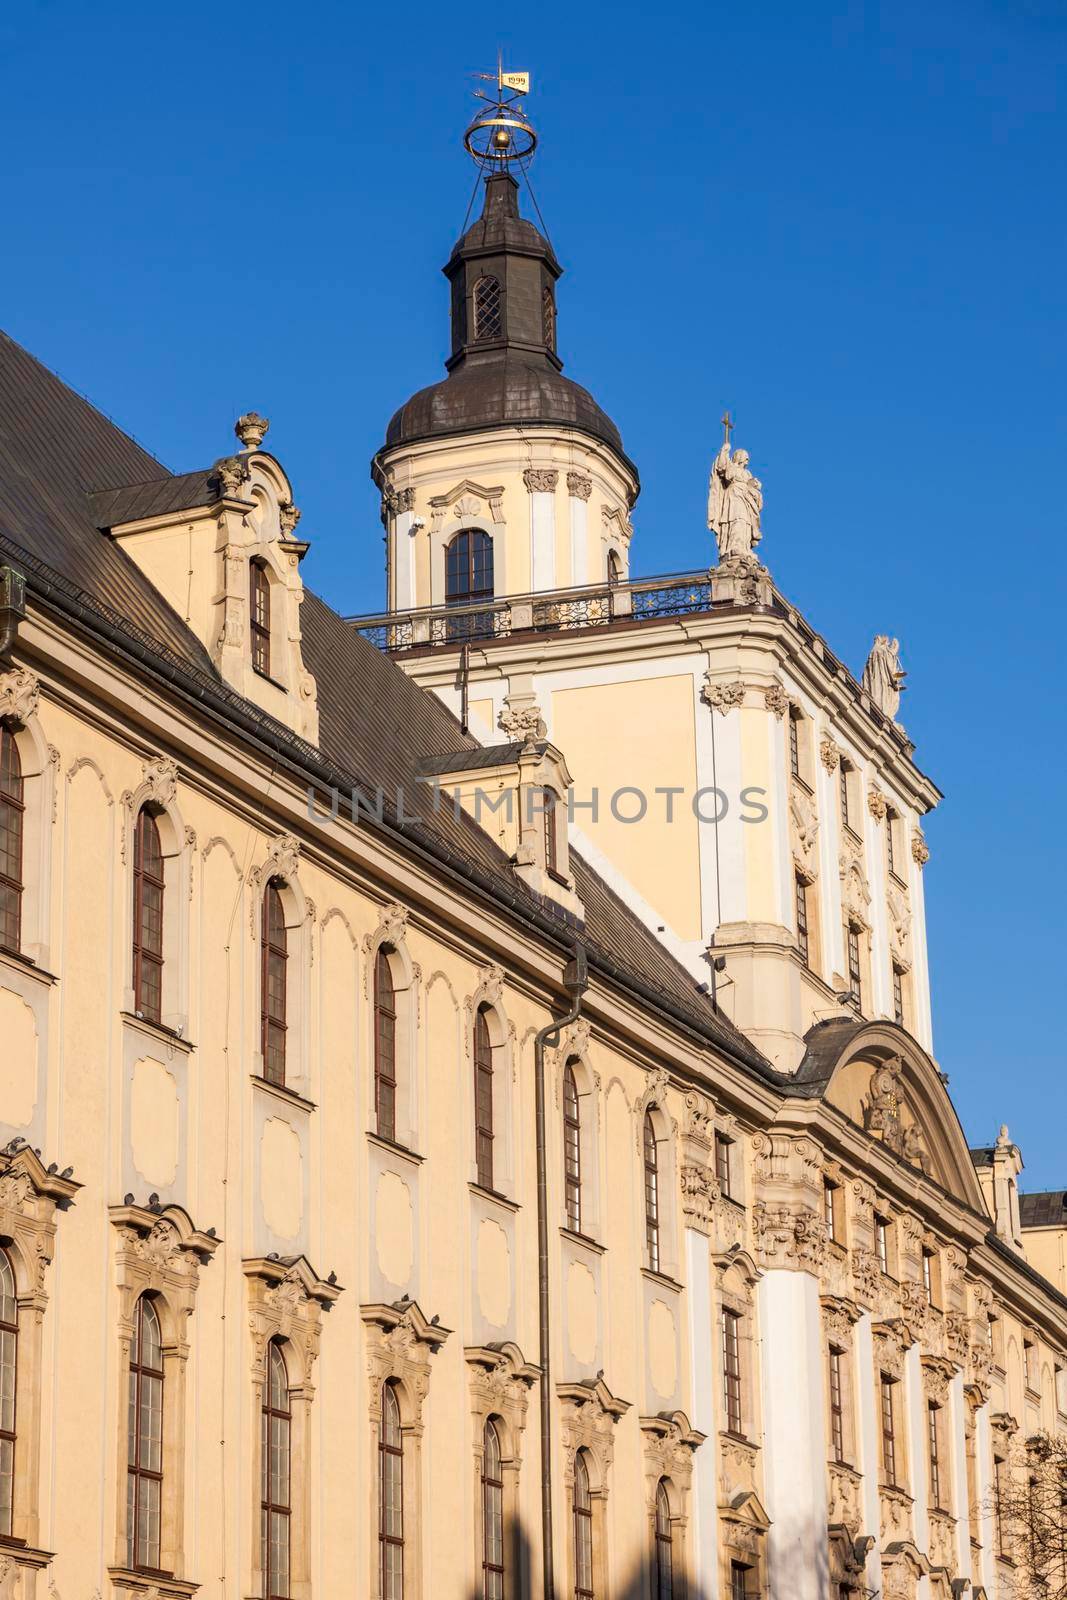  Wroclaw University building. Wroclaw, Lower Silesian, Poland.